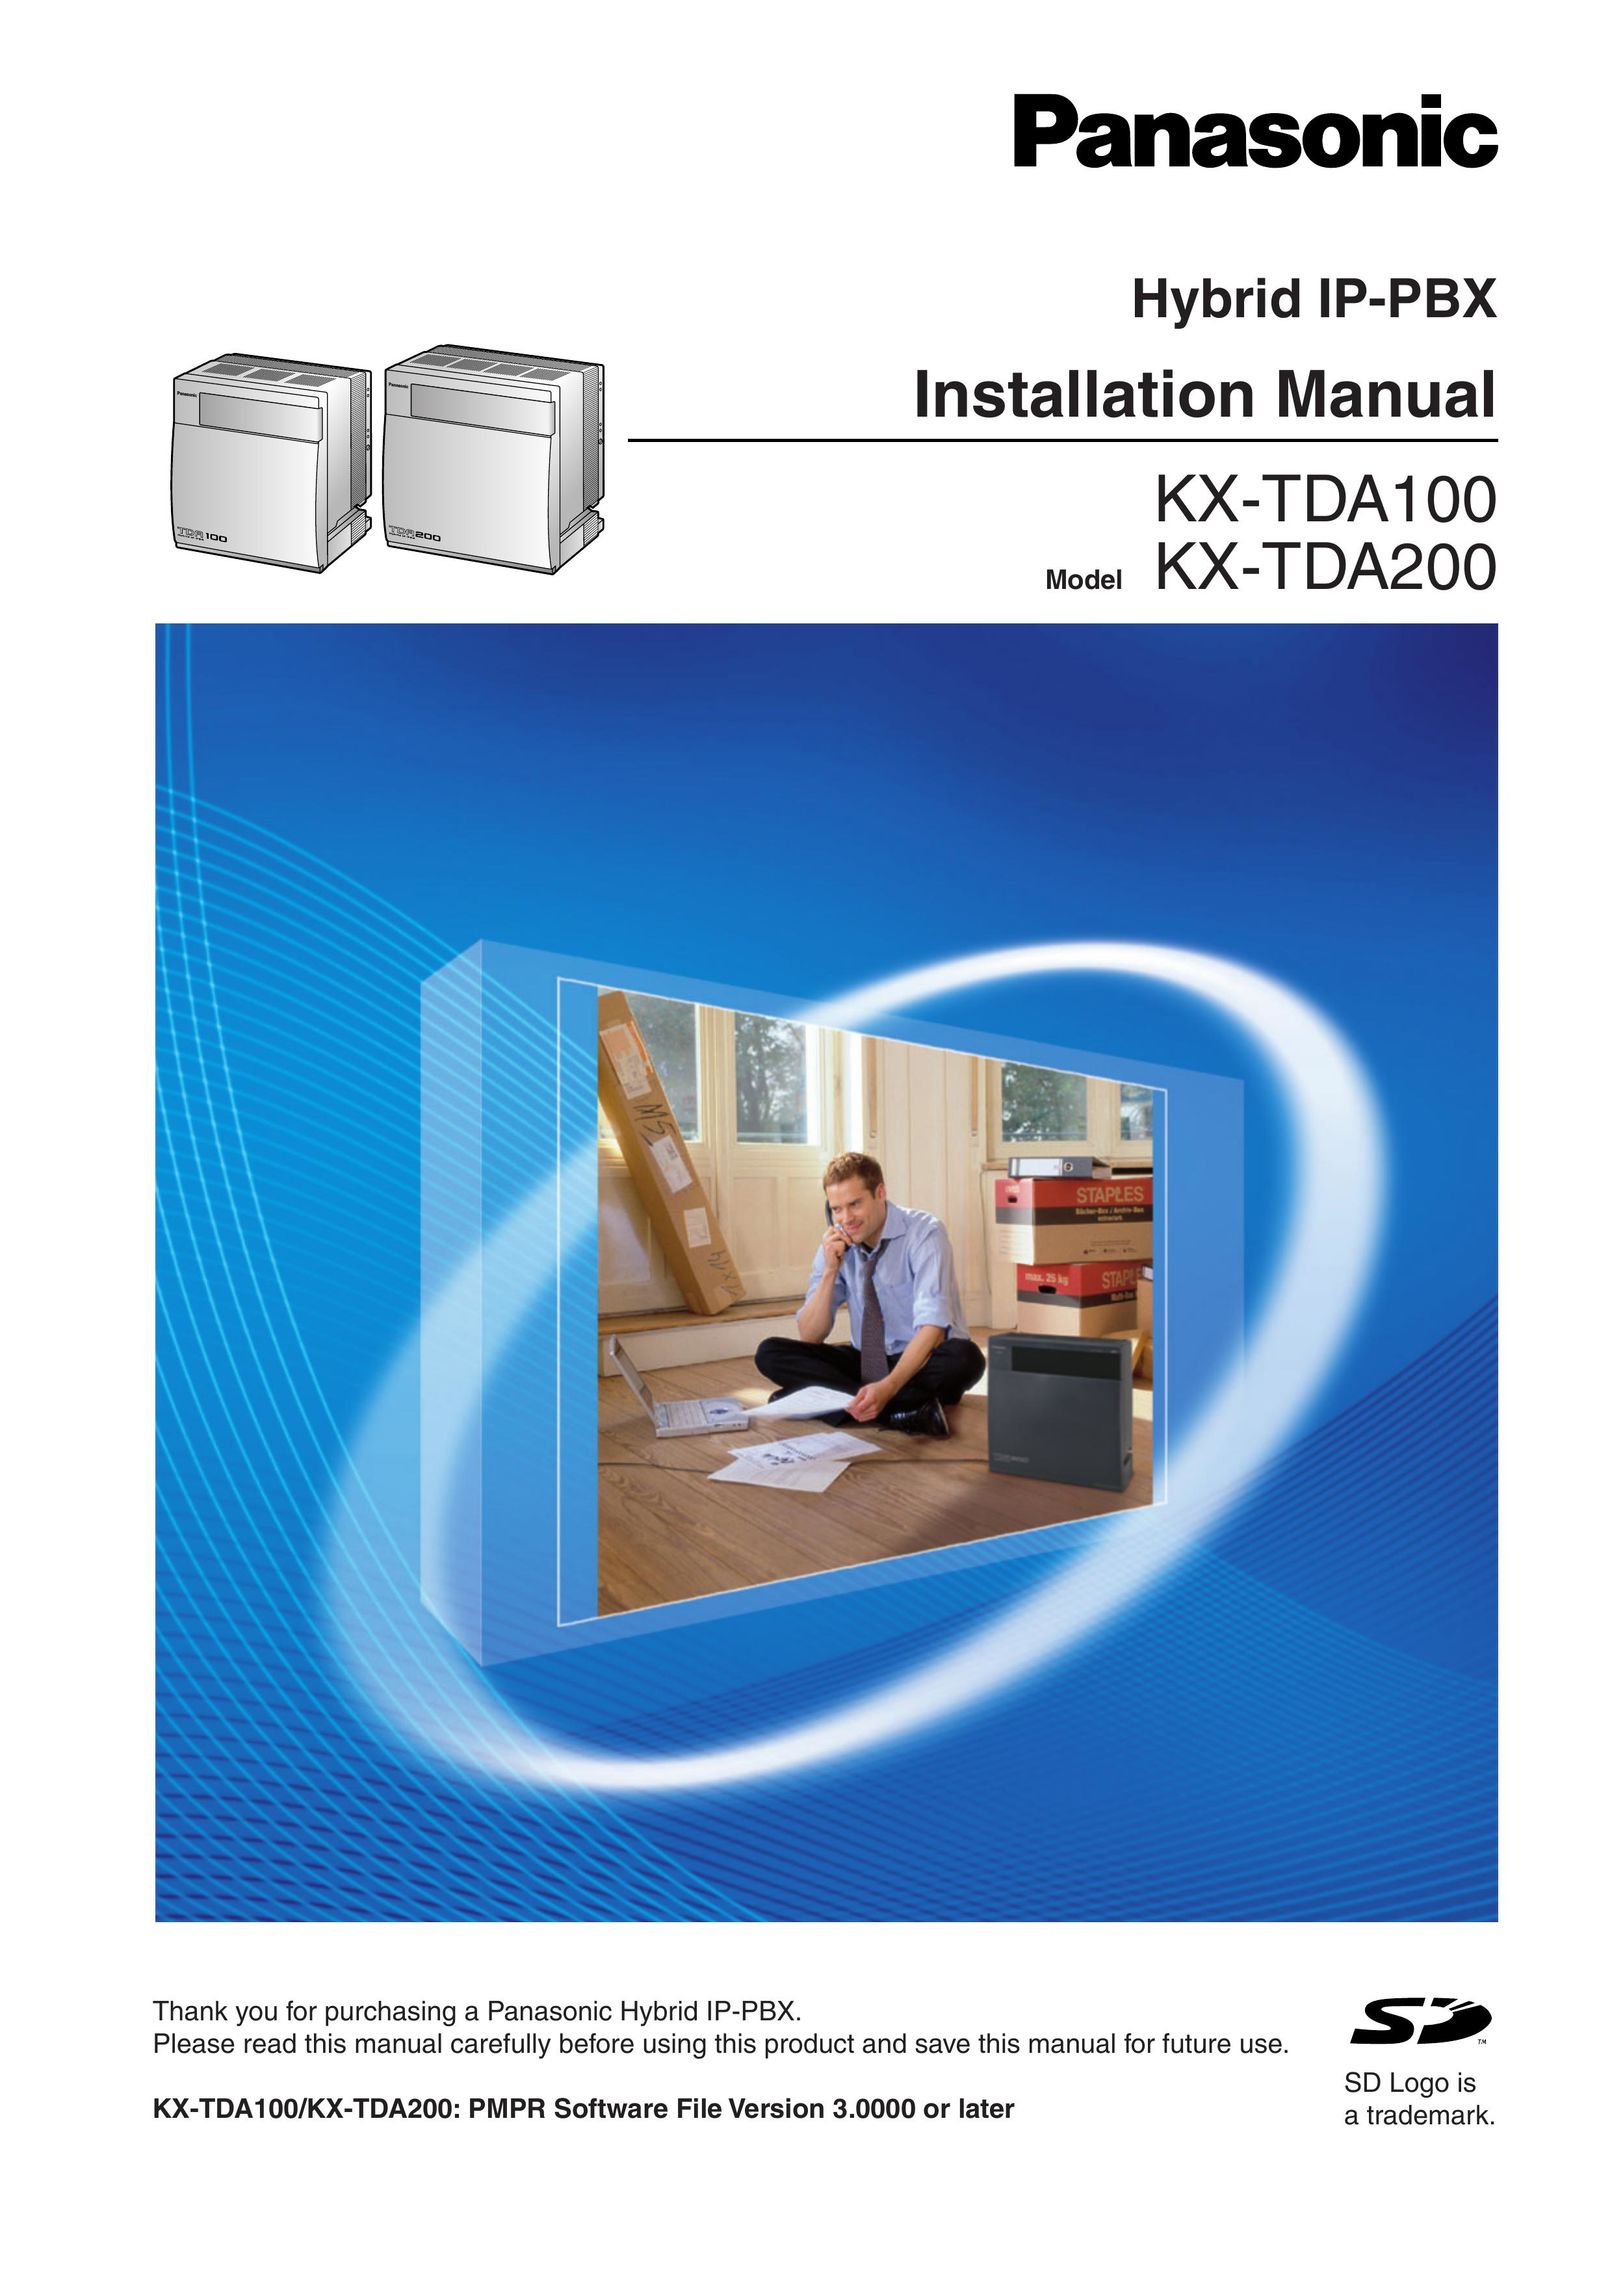 Panasonic KX-TDA100 Network Router User Manual